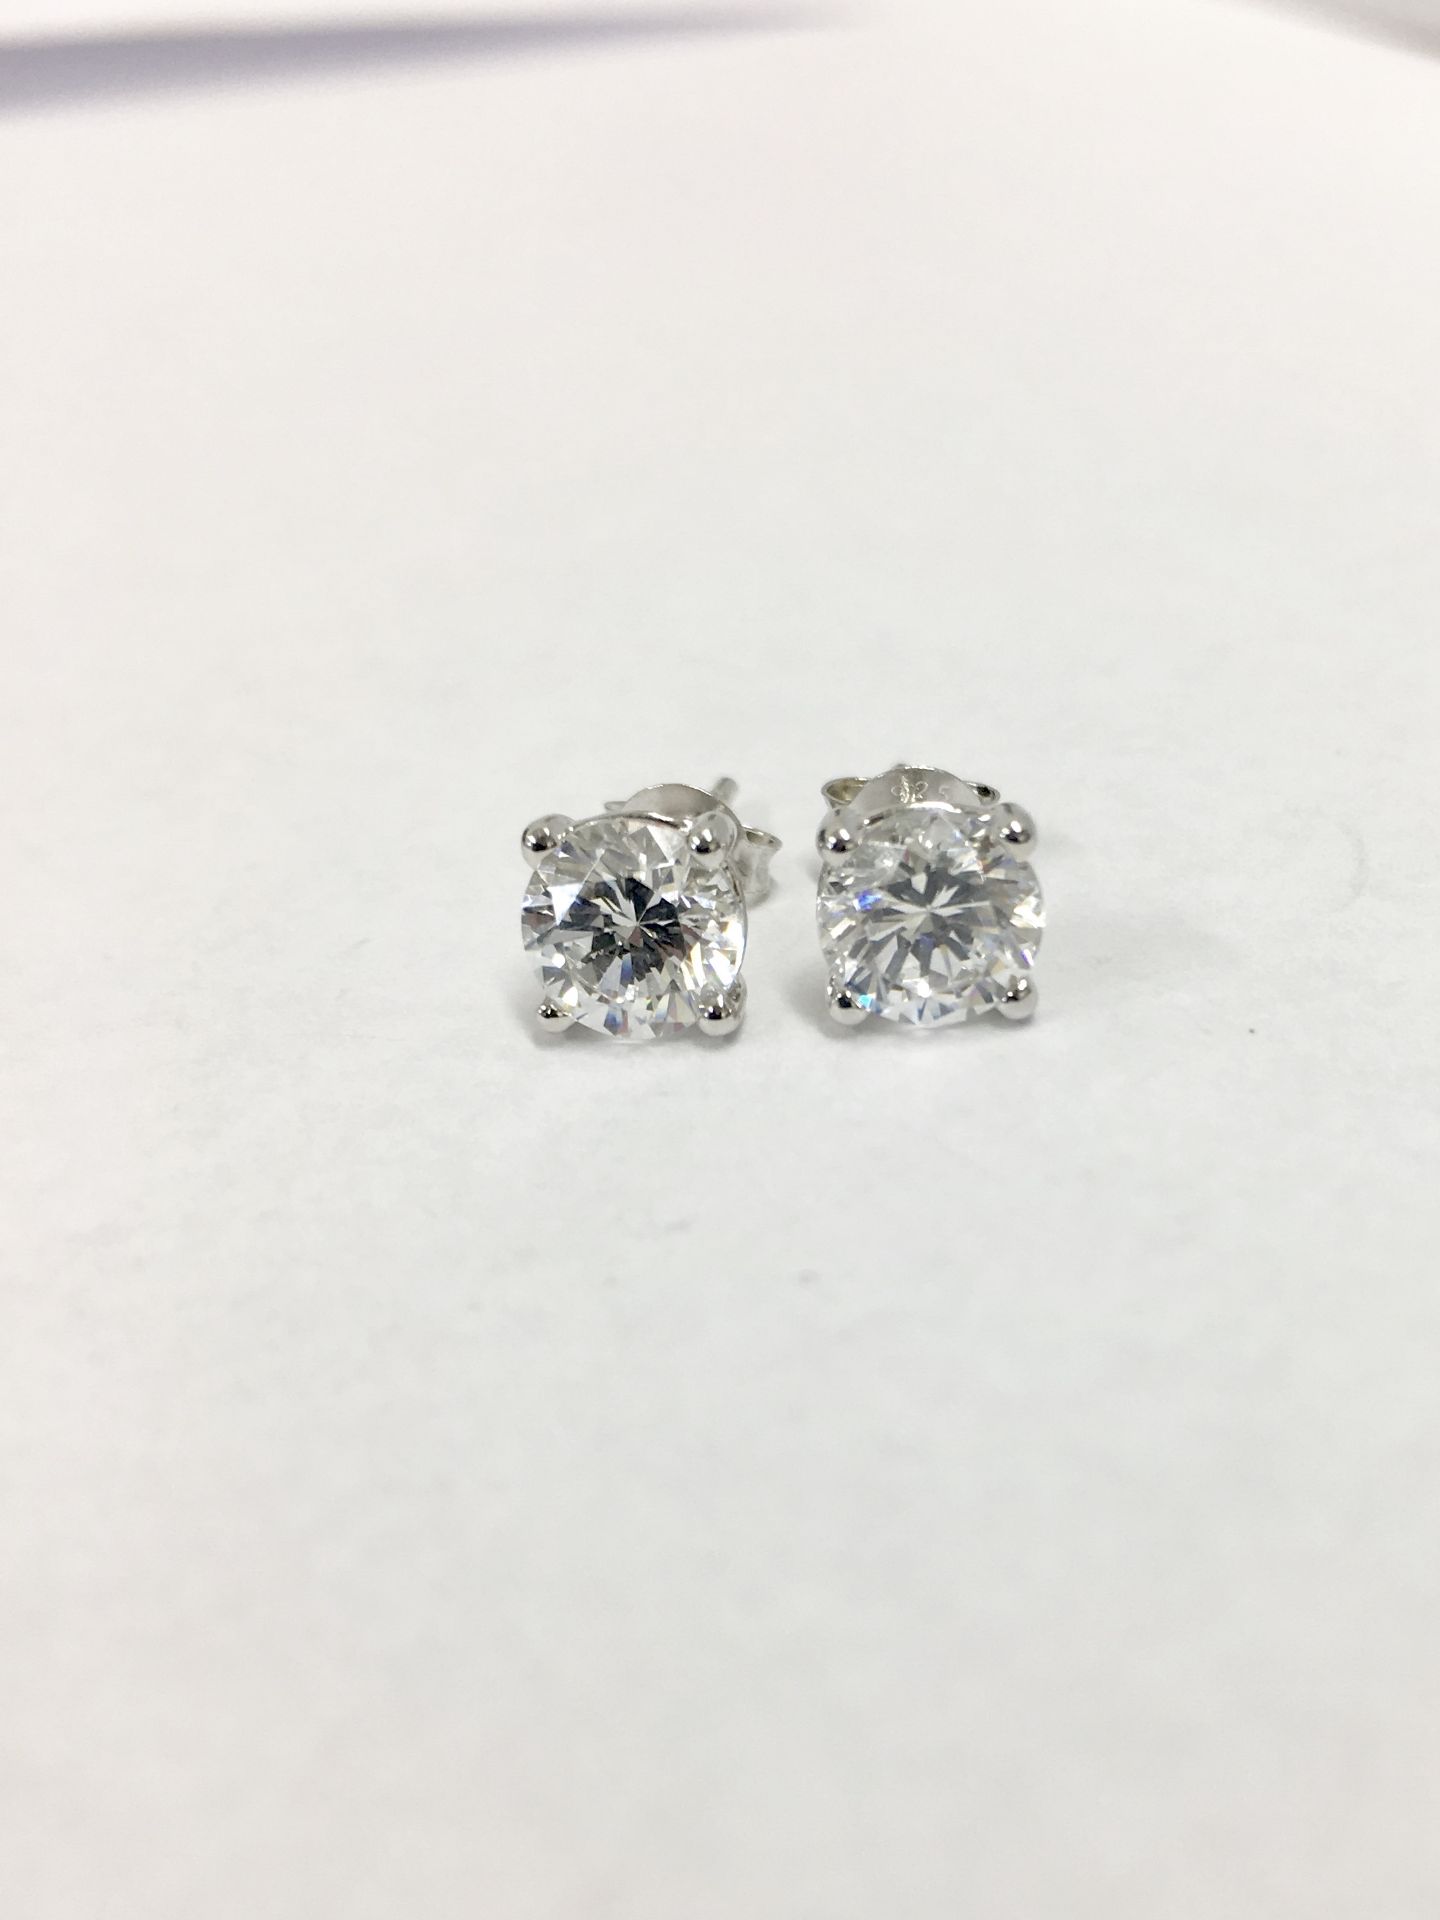 1.20ct diamond solitaire earrings set in 18ct white gold. 2 x brilliant cut diamonds, 0.60ct (